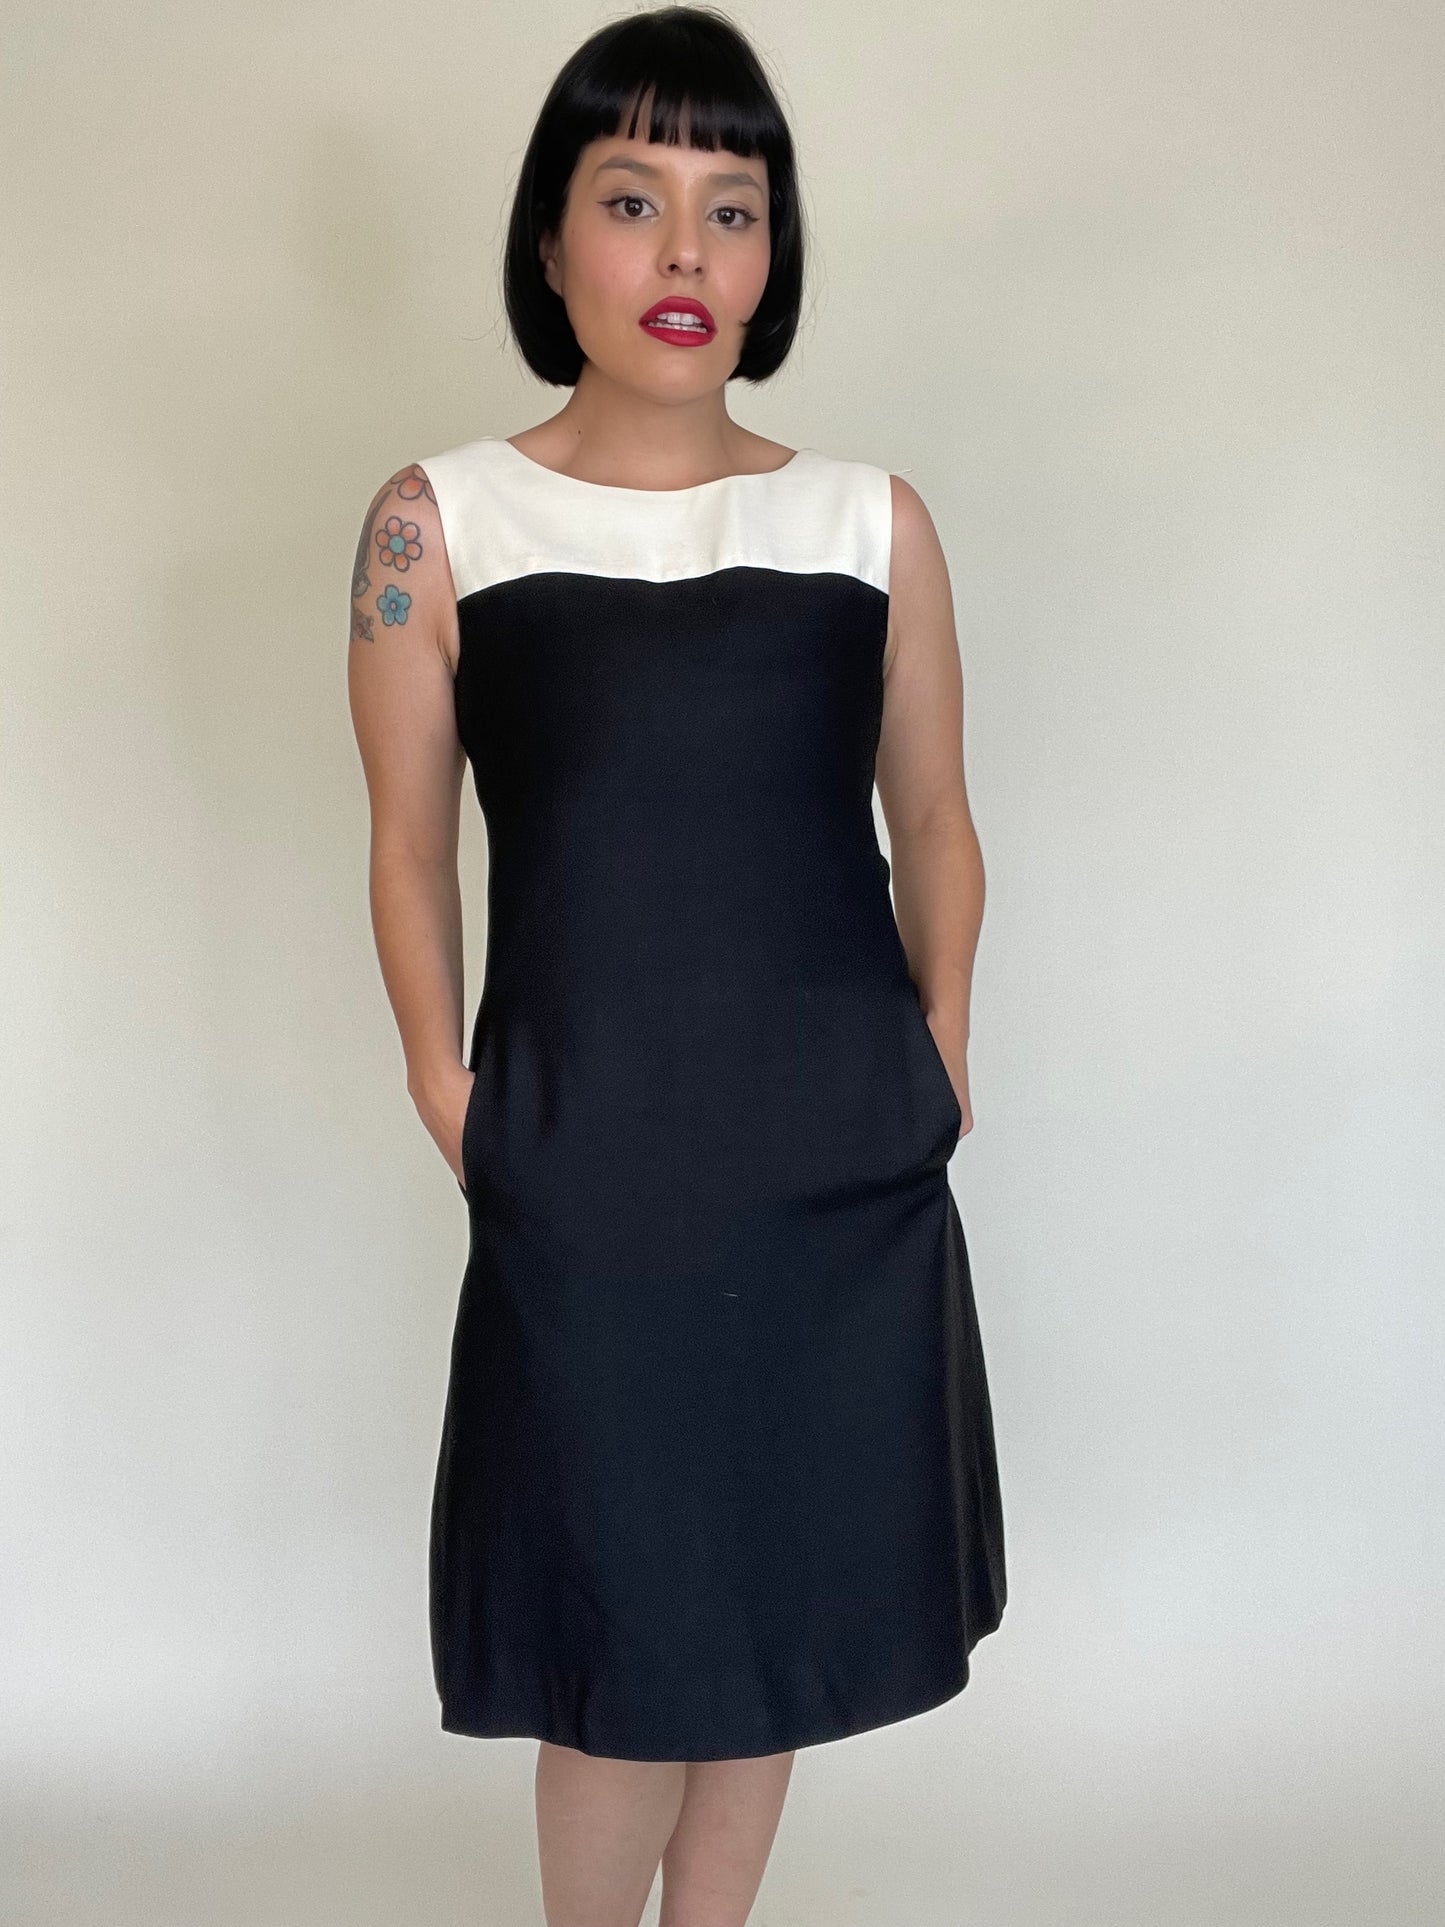 Vintage 60s Ivory White Black Linen Cotton Mod Dress Best Fits Sizes XS-SM